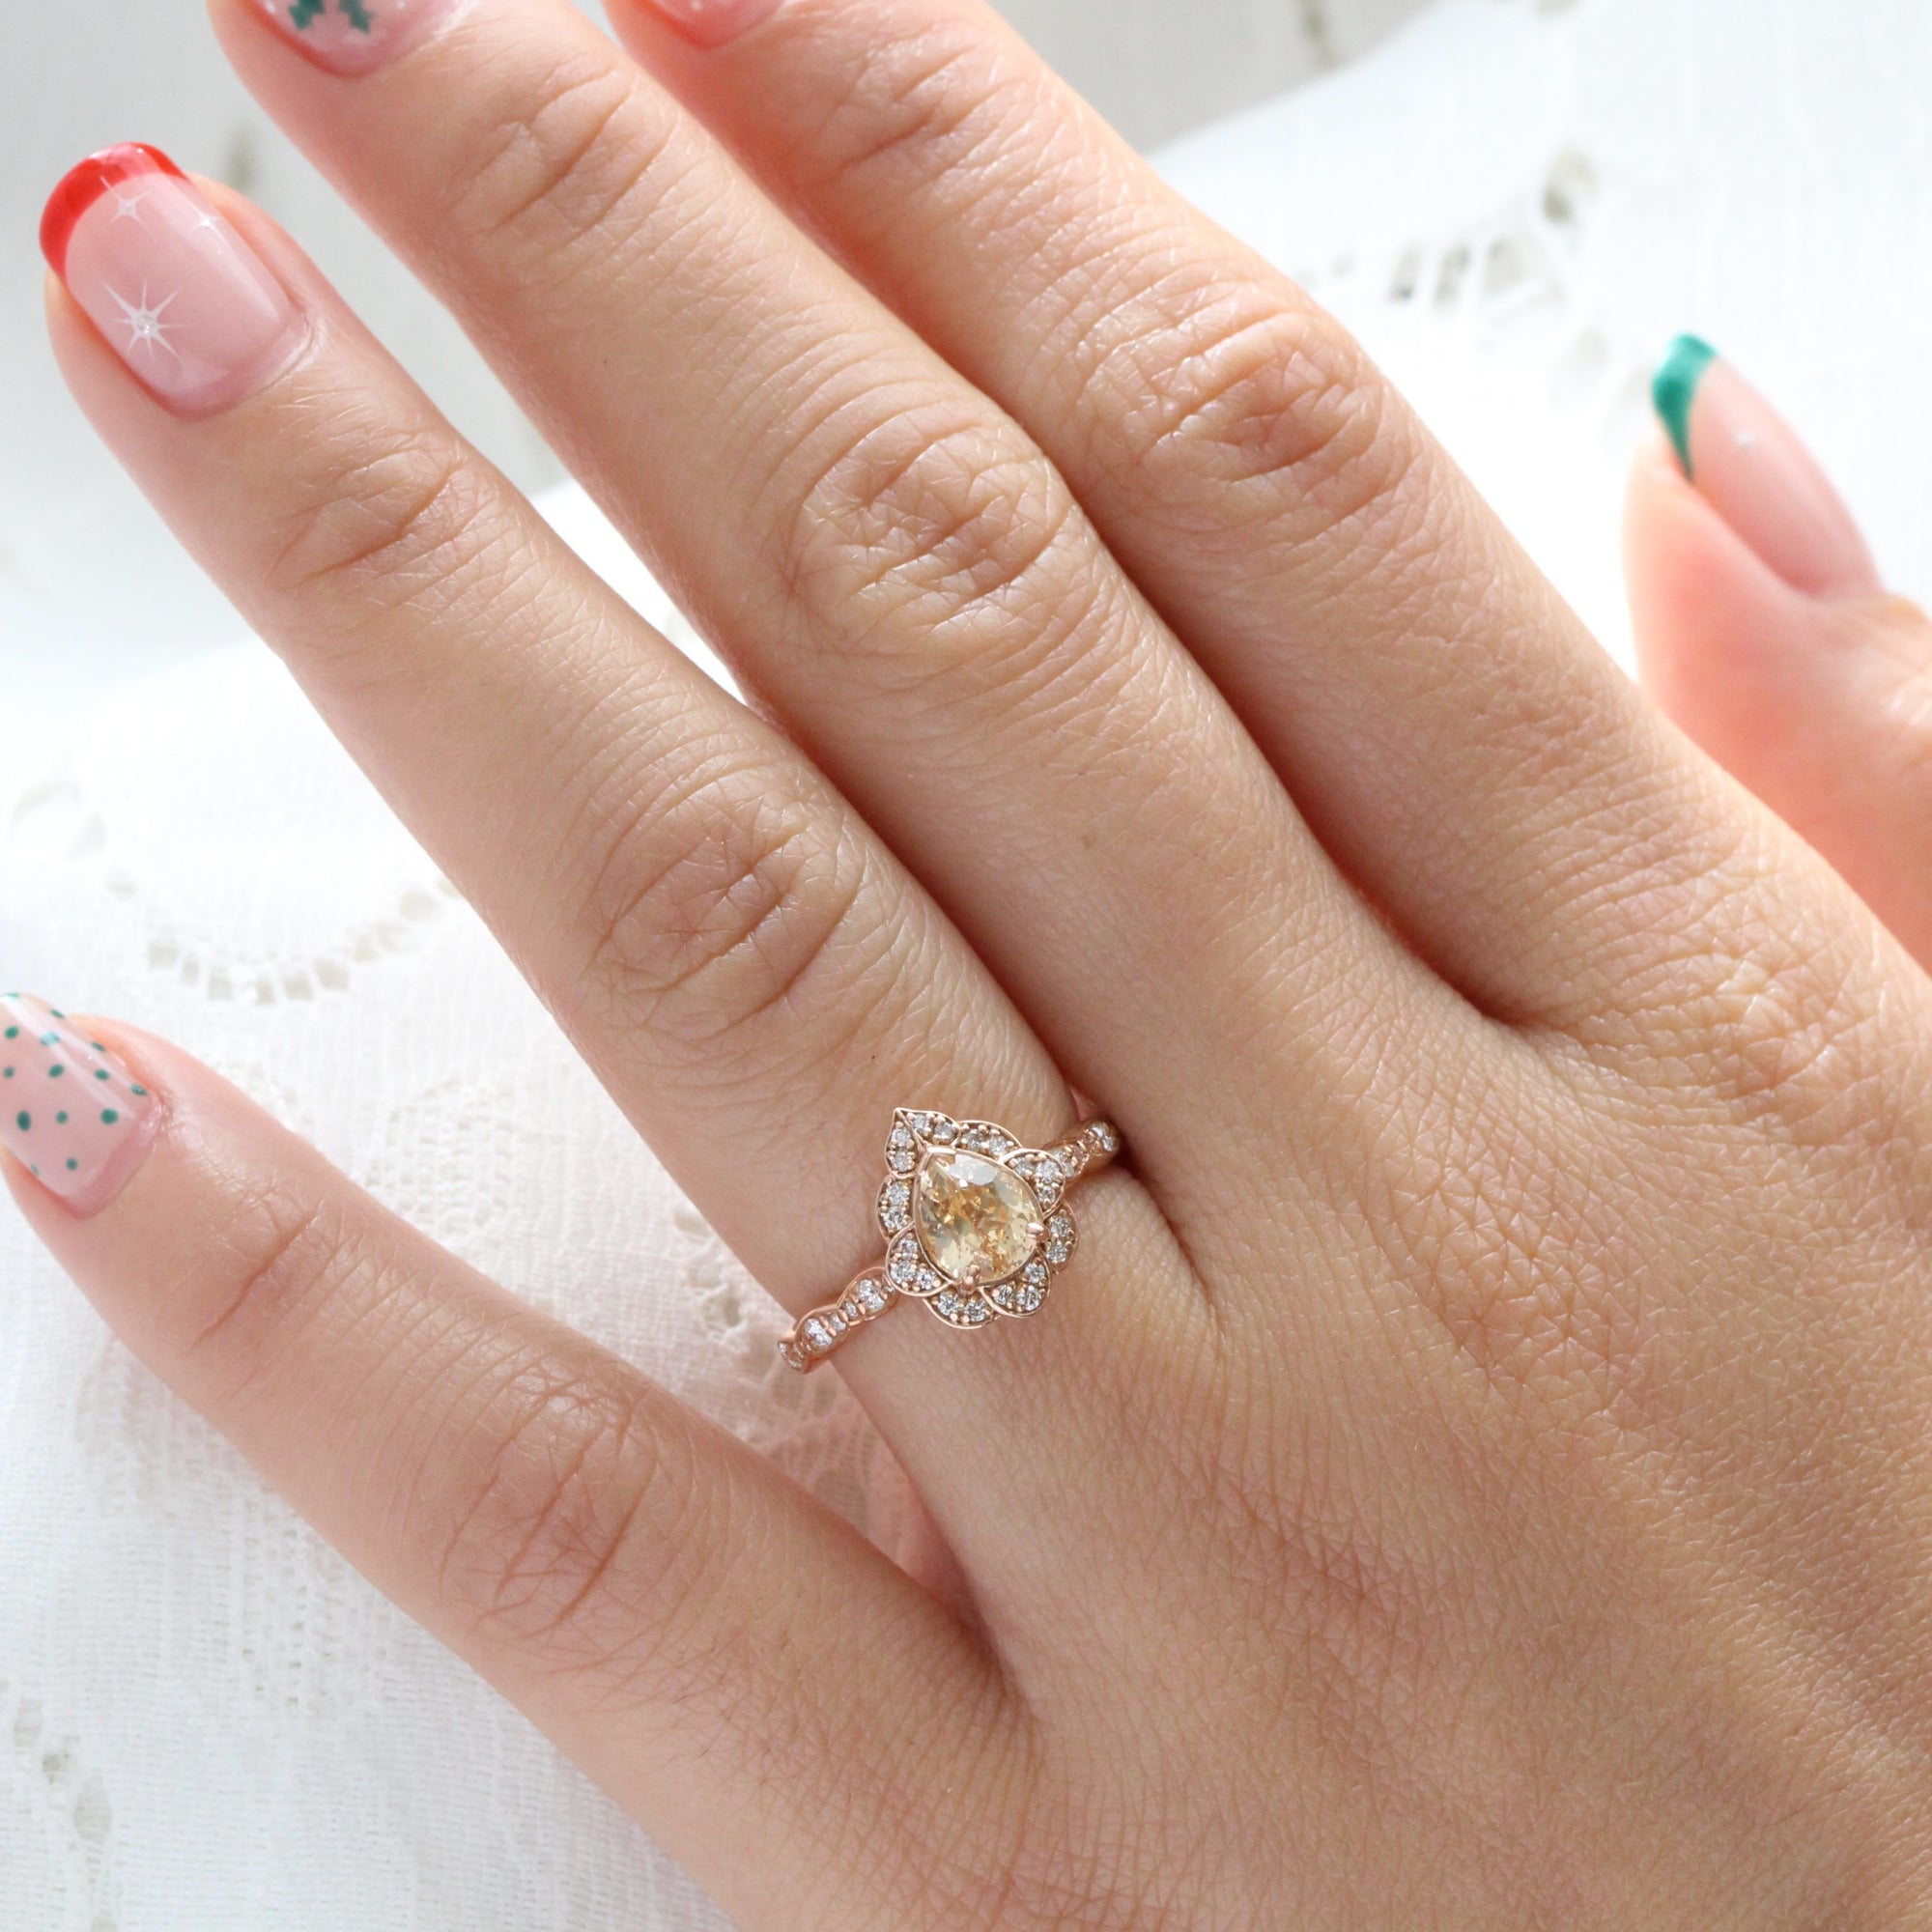 Vintage style pear cut peach sapphire ring rose gold sapphire diamond ring la more design jewelry